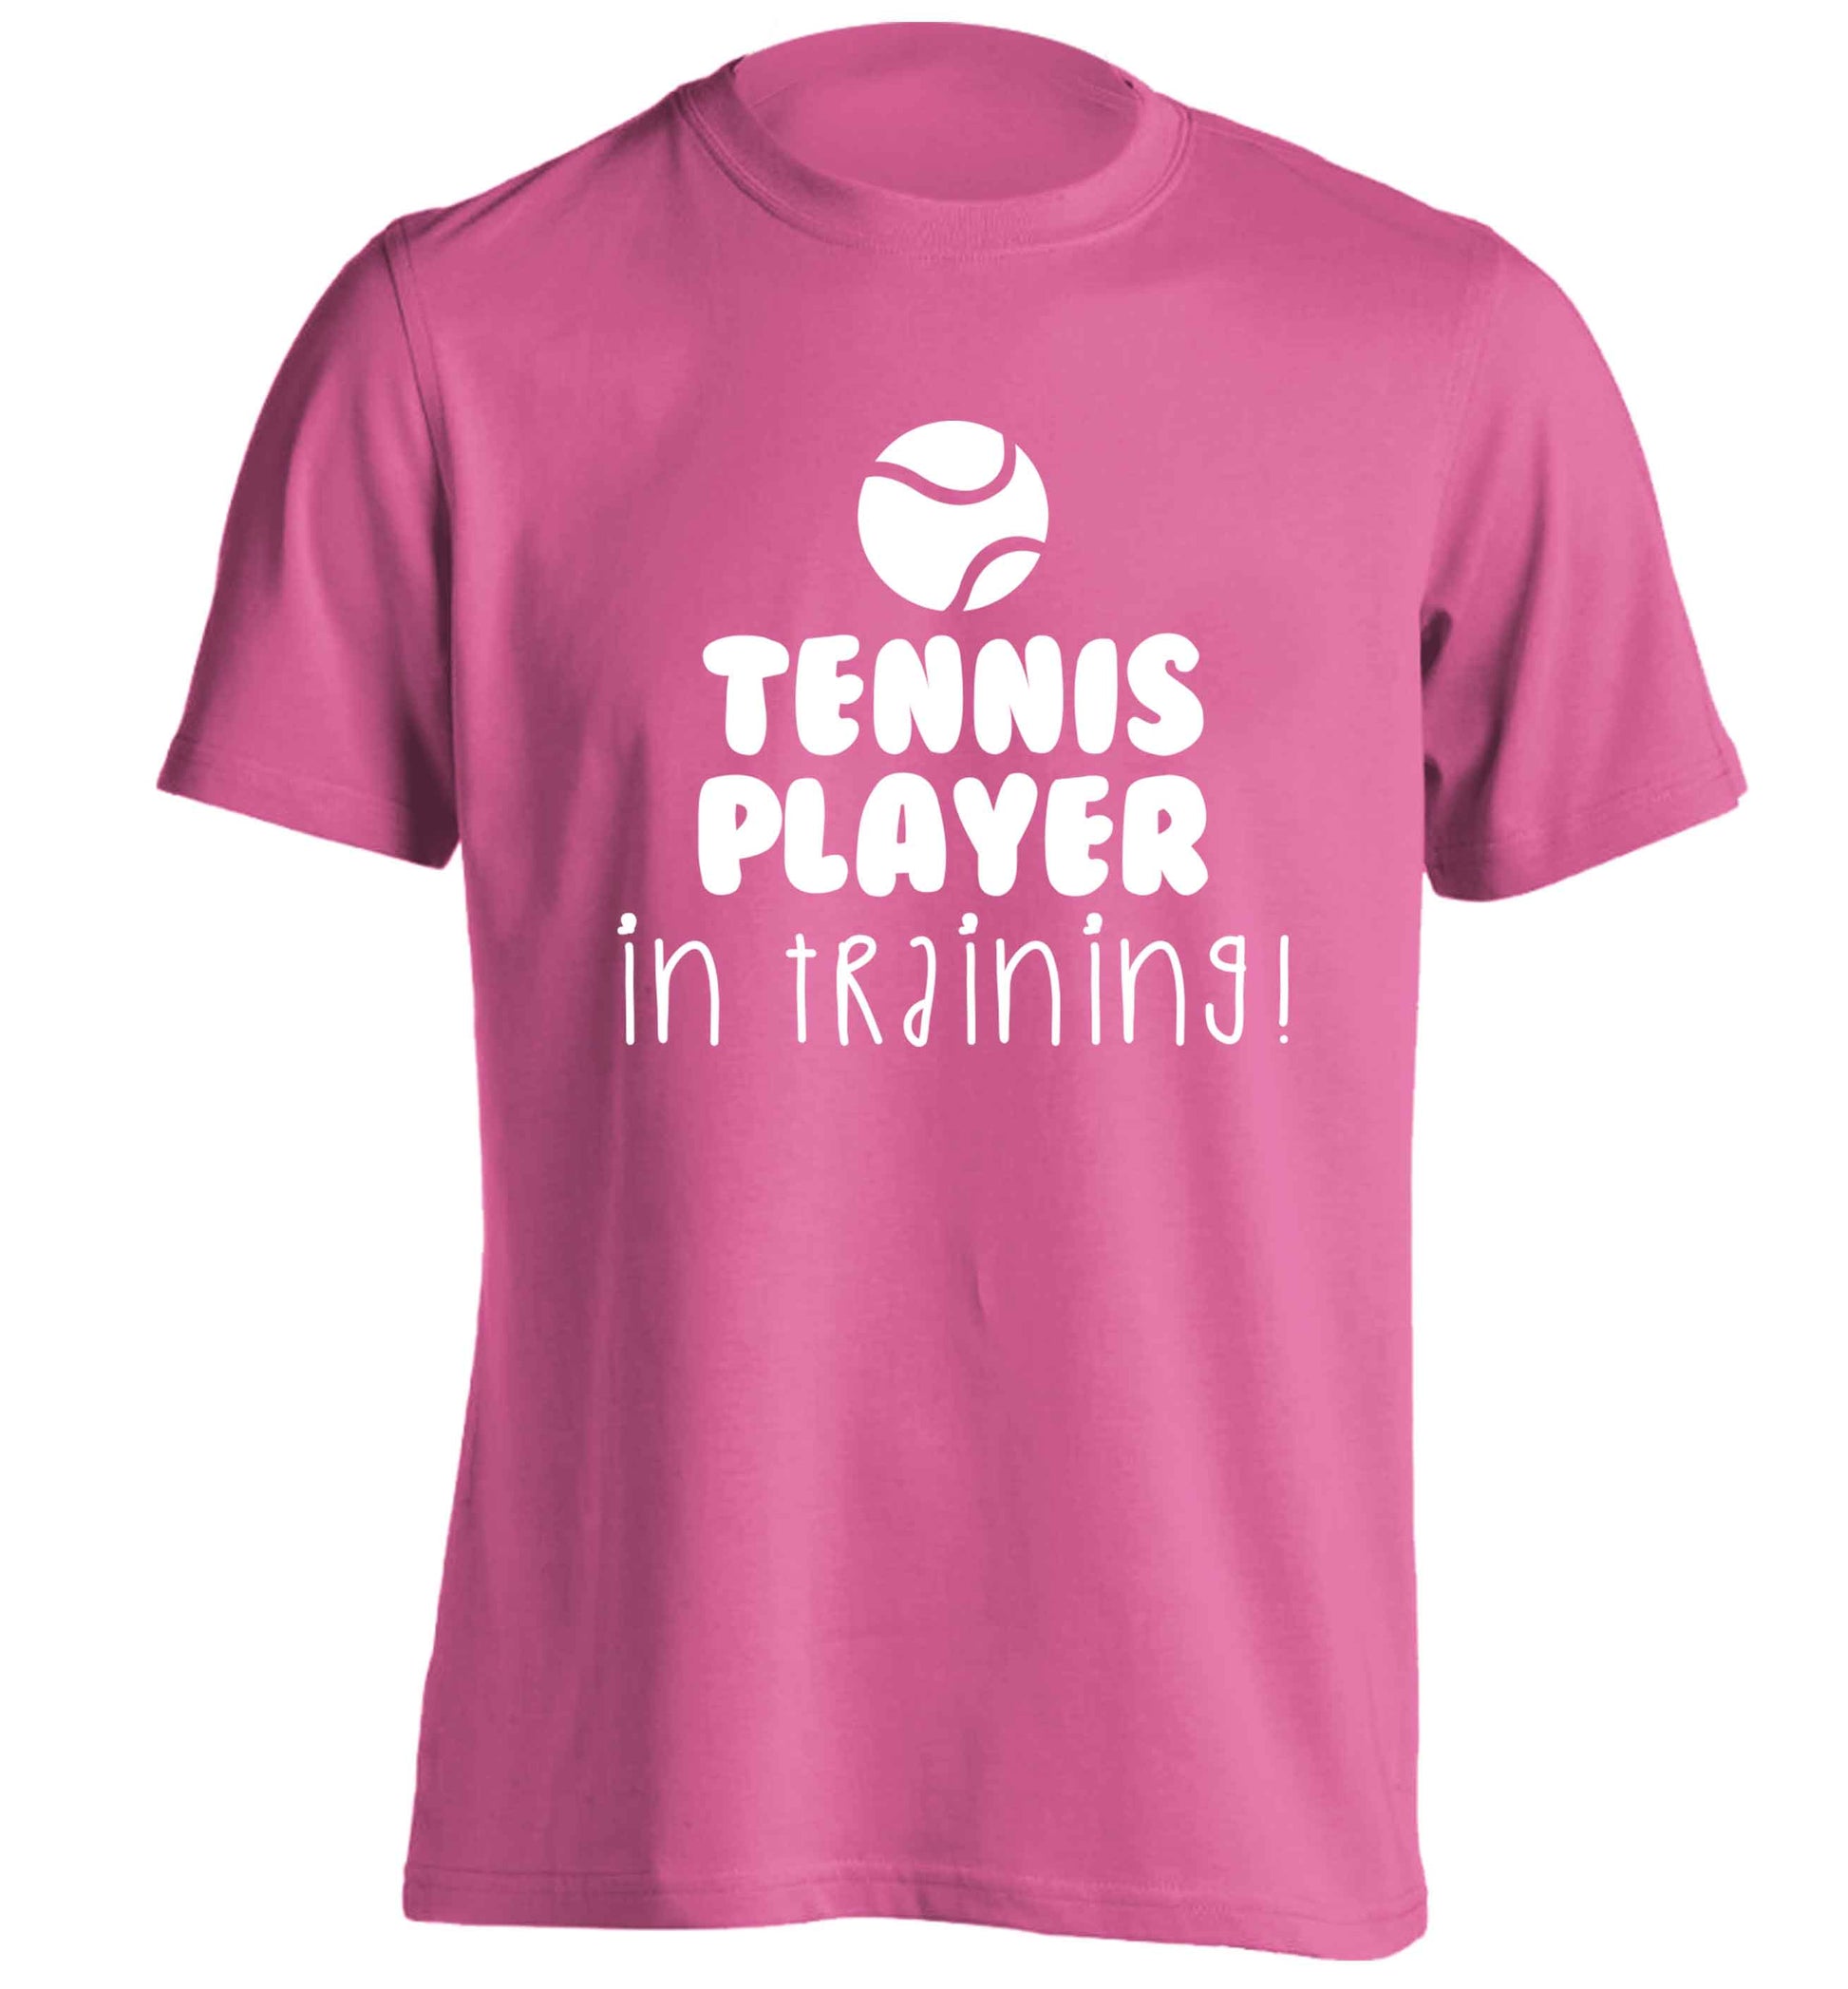 Tennis player in training adults unisex pink Tshirt 2XL